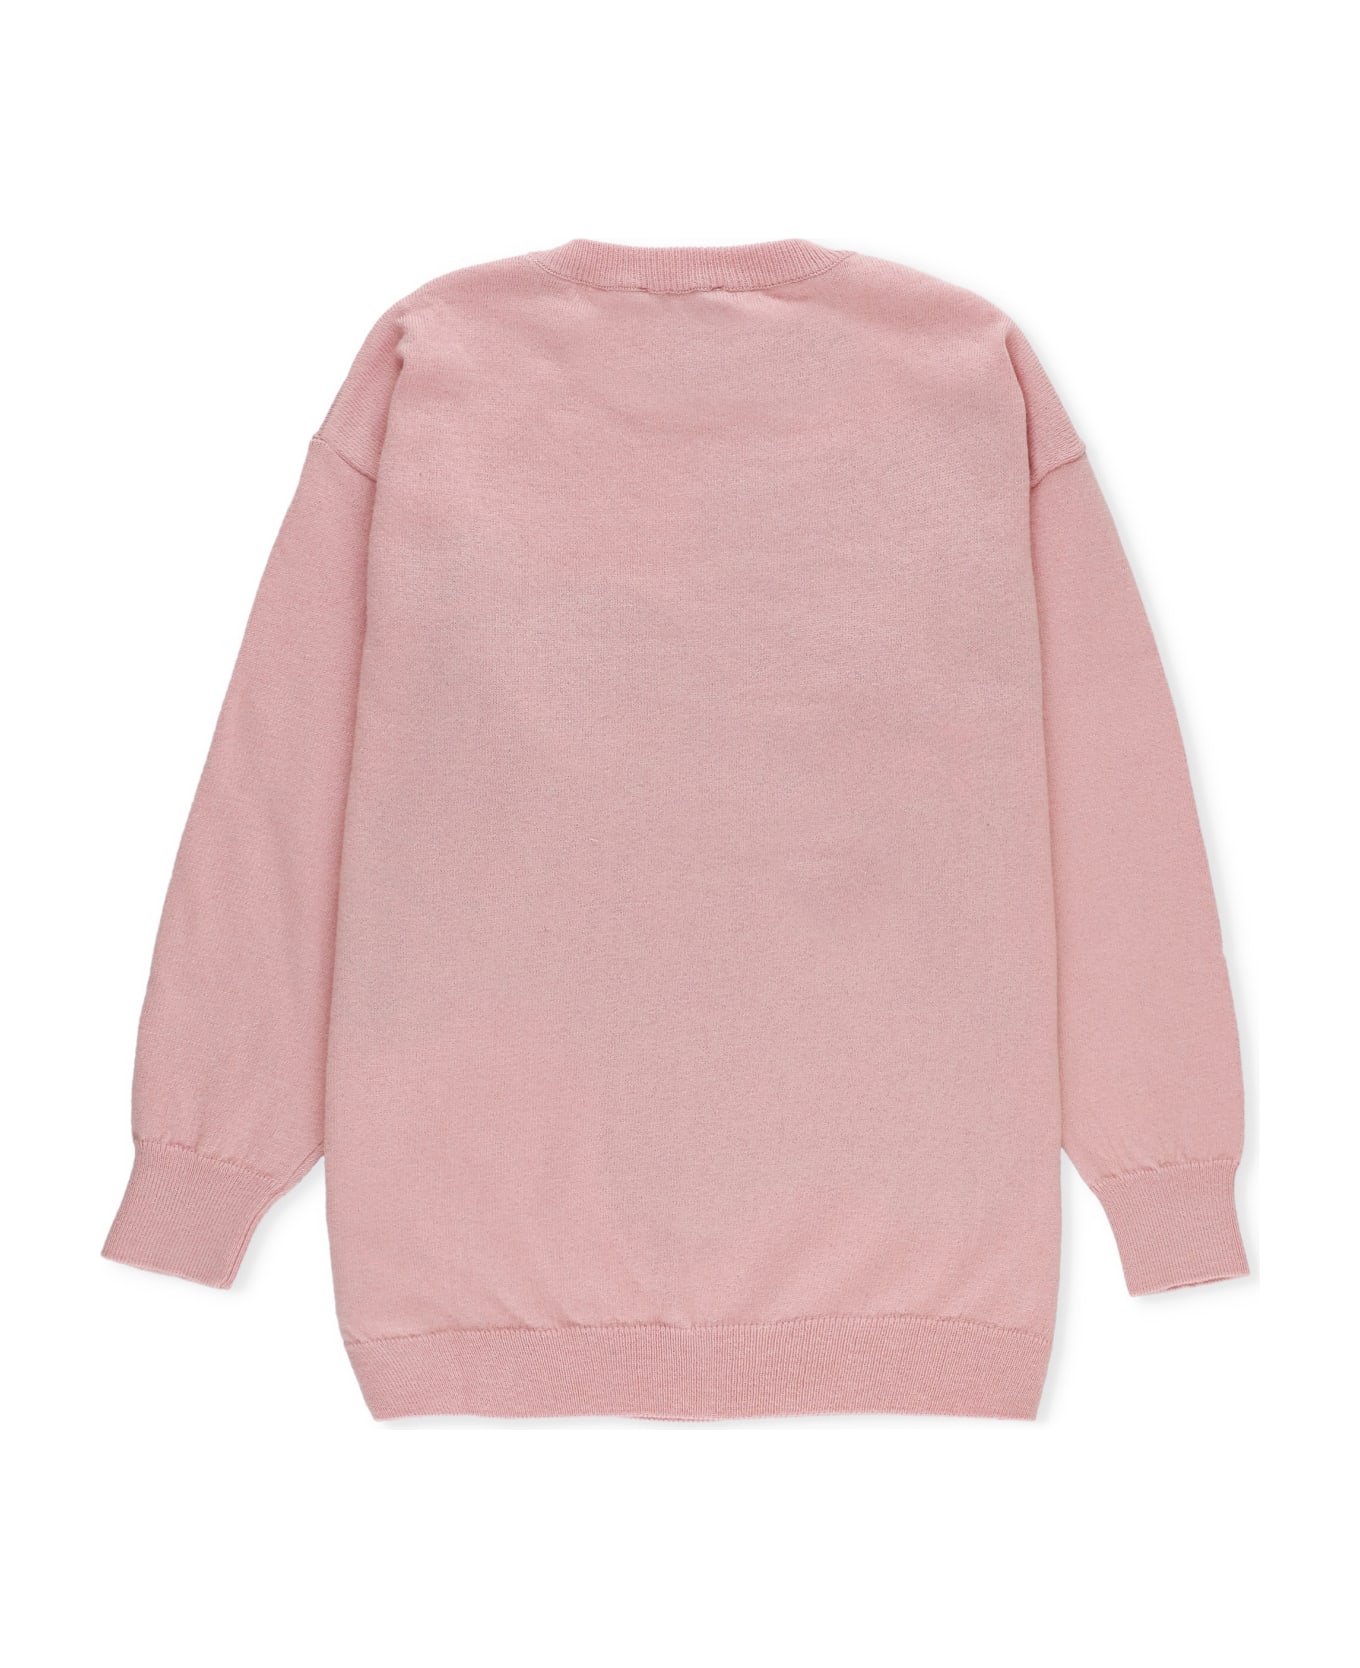 Moschino Teddy Friends Sweater - Sugar Rose ニットウェア＆スウェットシャツ